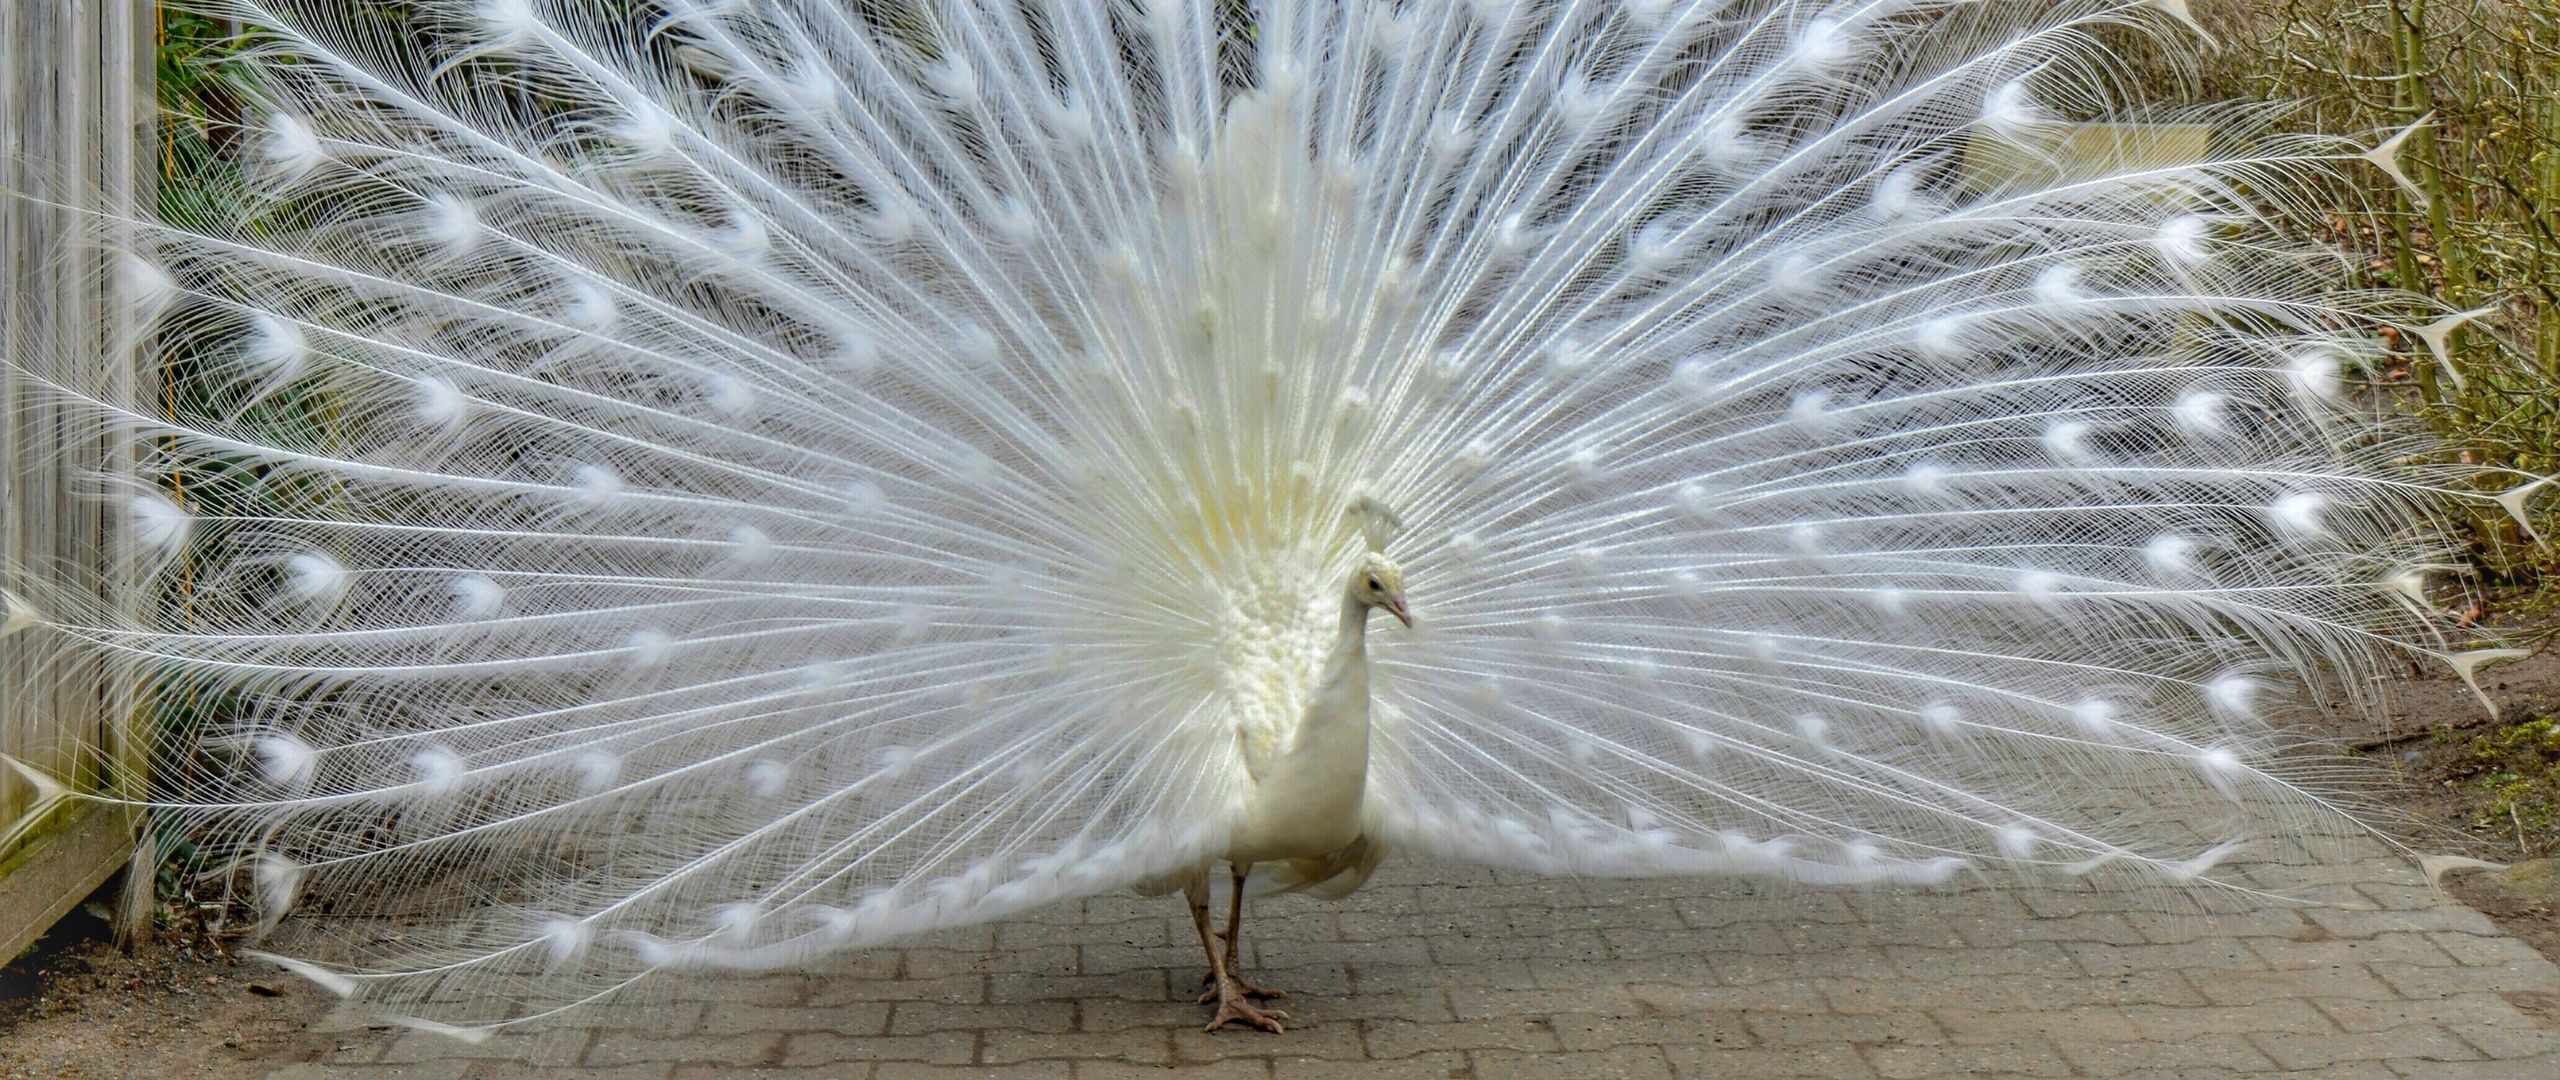 Download wallpaper 2560x1080 peacock, bird, tail, beautiful dual wide 1080p  hd background